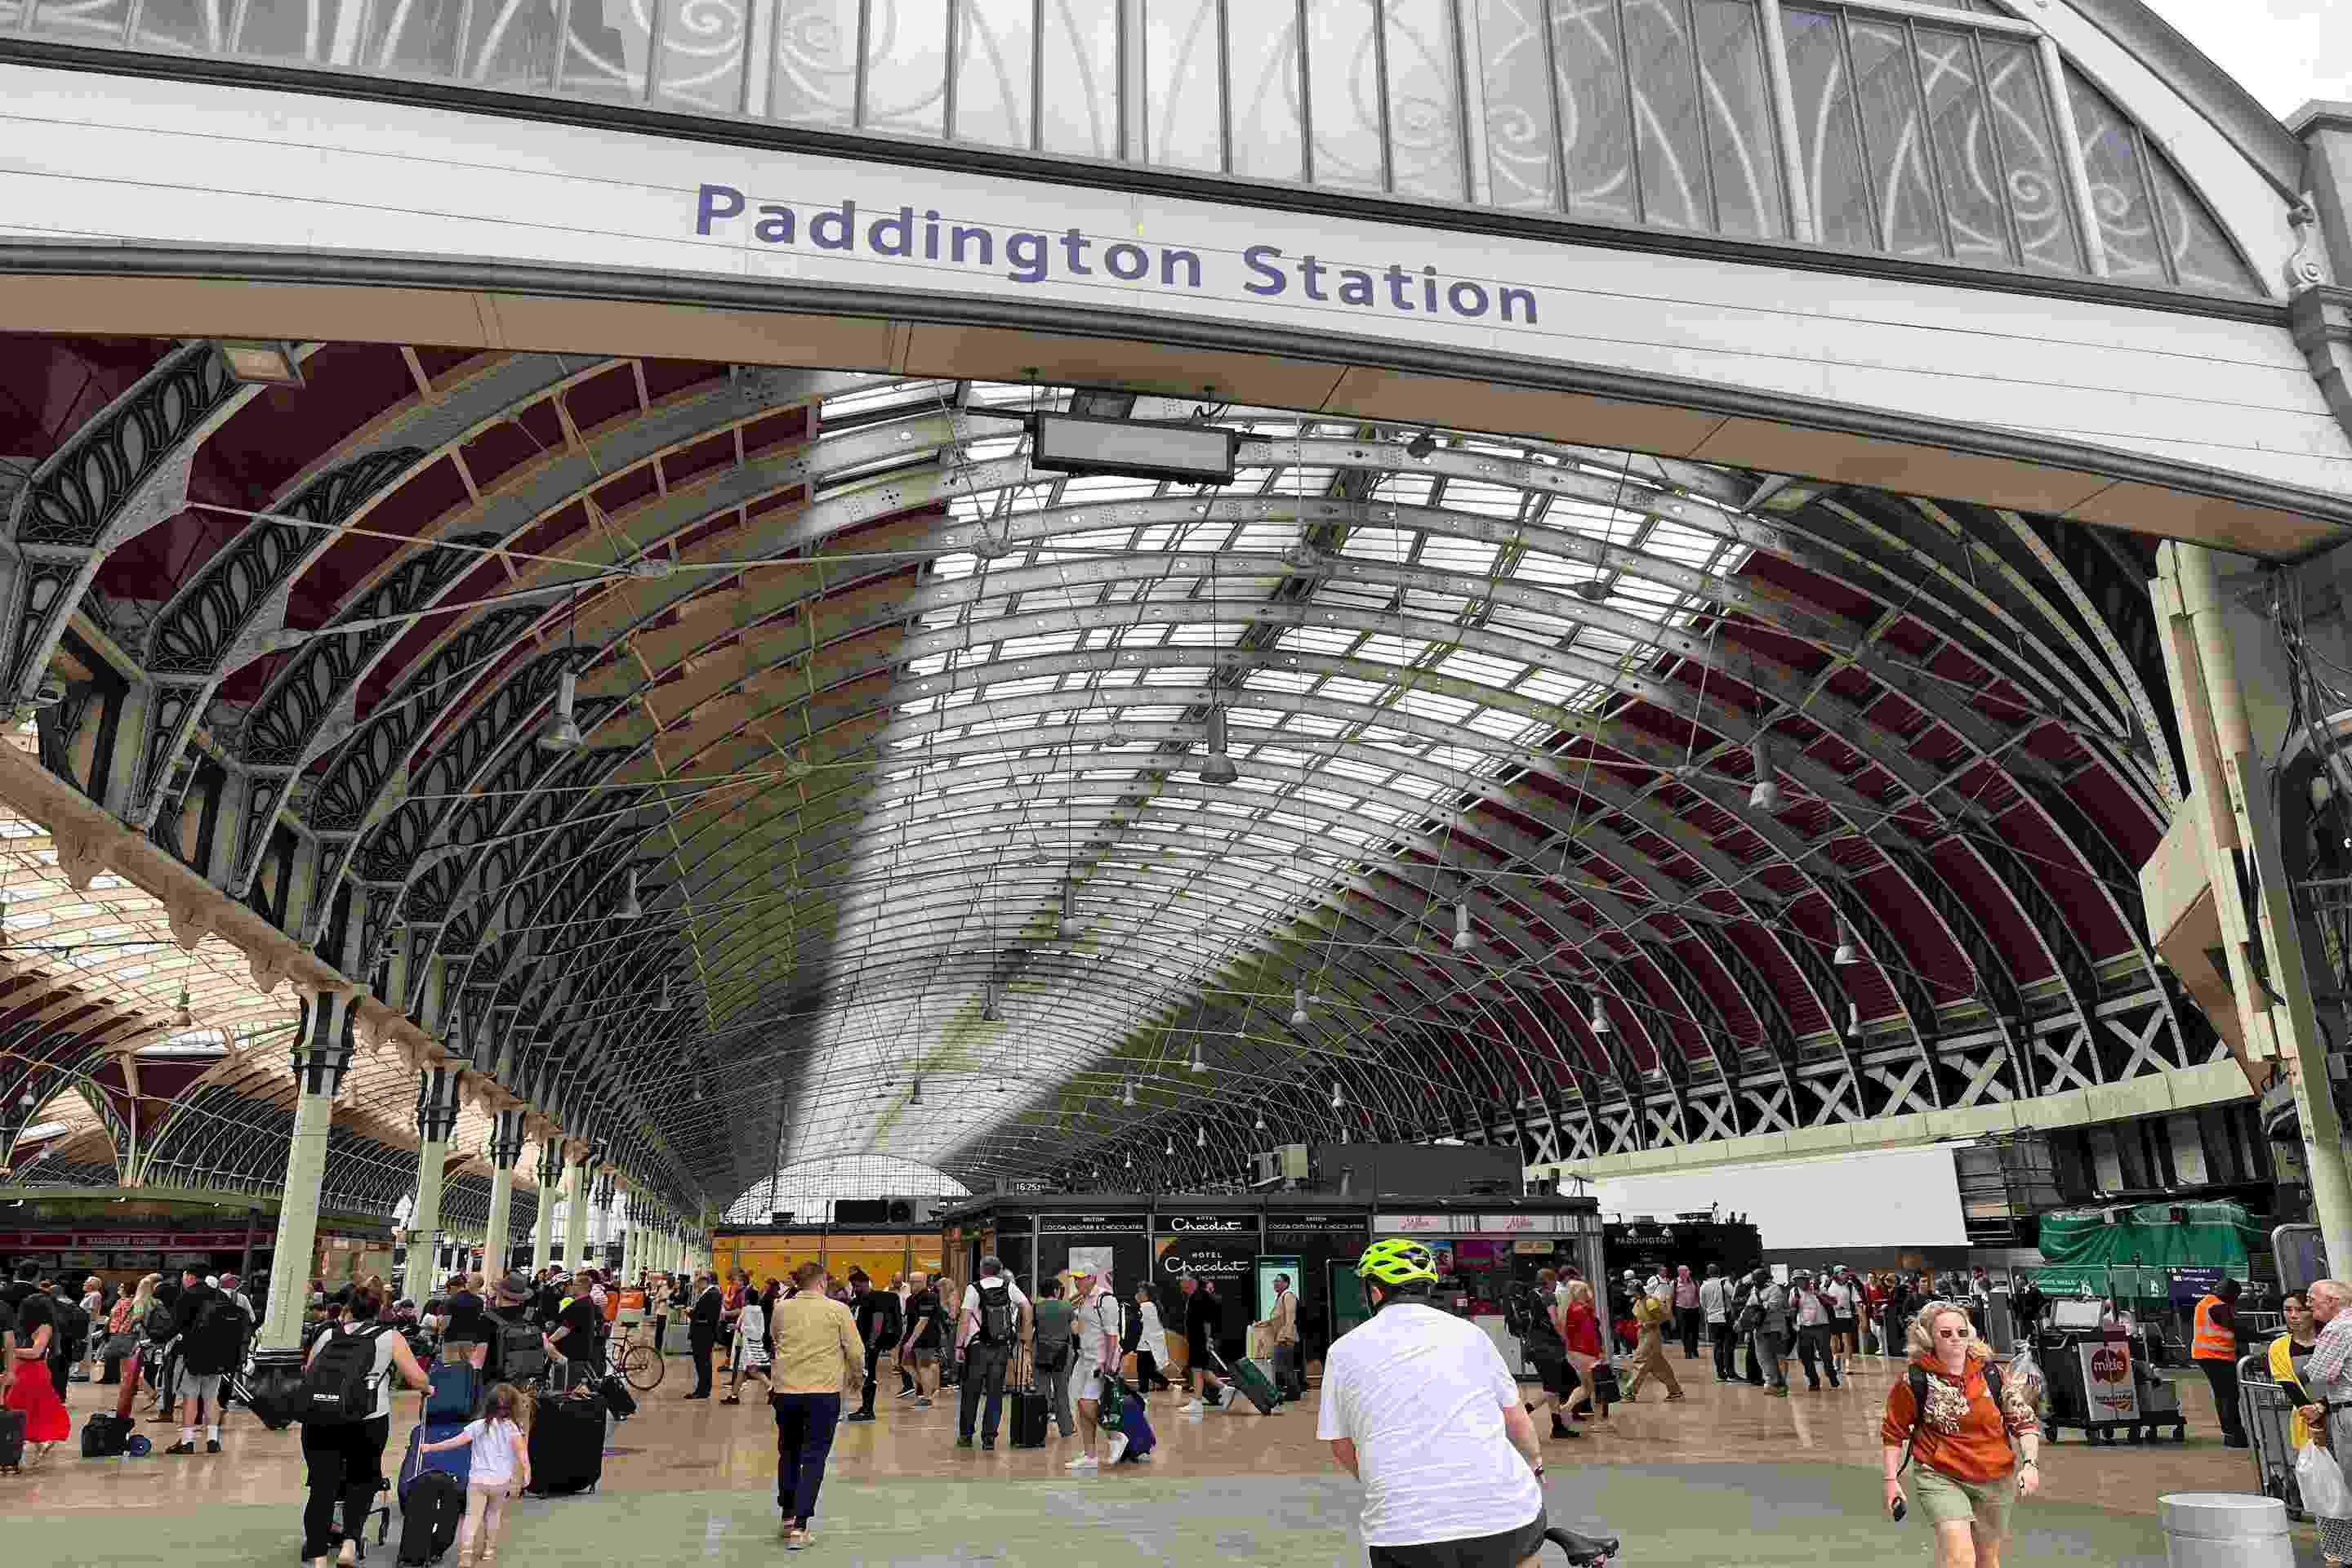 External view of Paddington Station in London